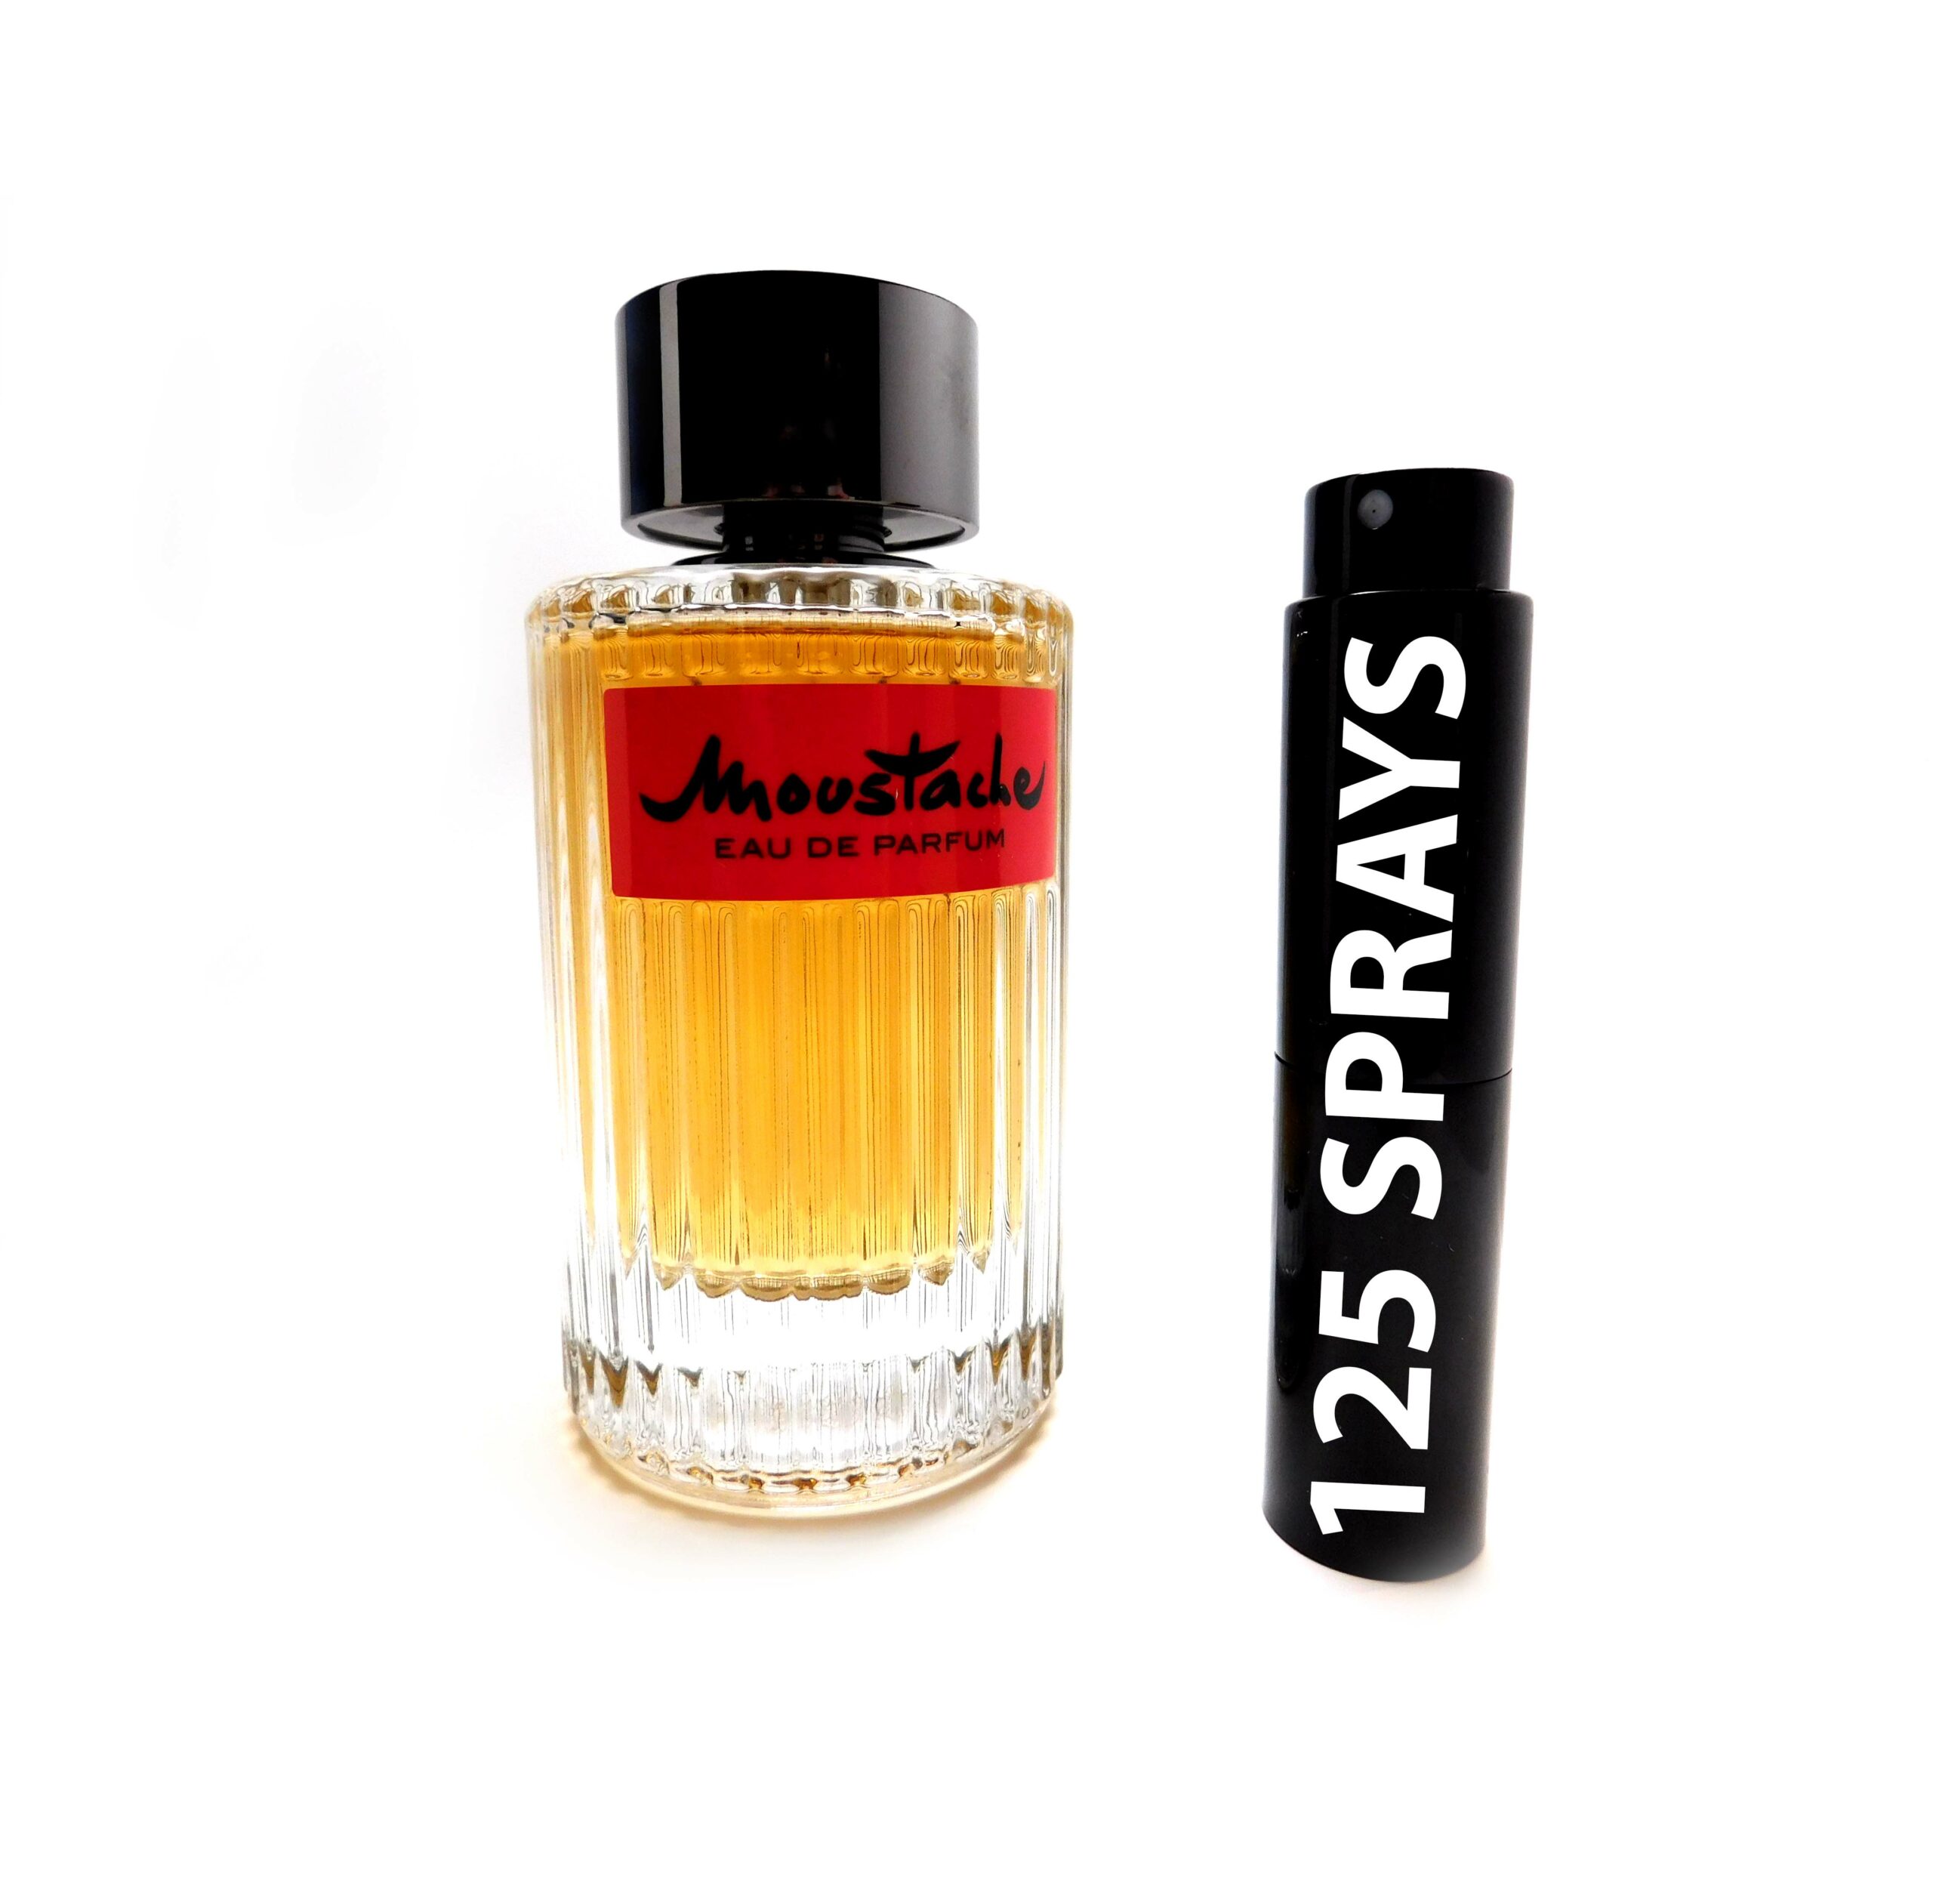 EAU DE PARFUM ROCHAS 8ML TRAVEL ATOMIZER SPRAYER COLOGNE – Best Brands Perfume